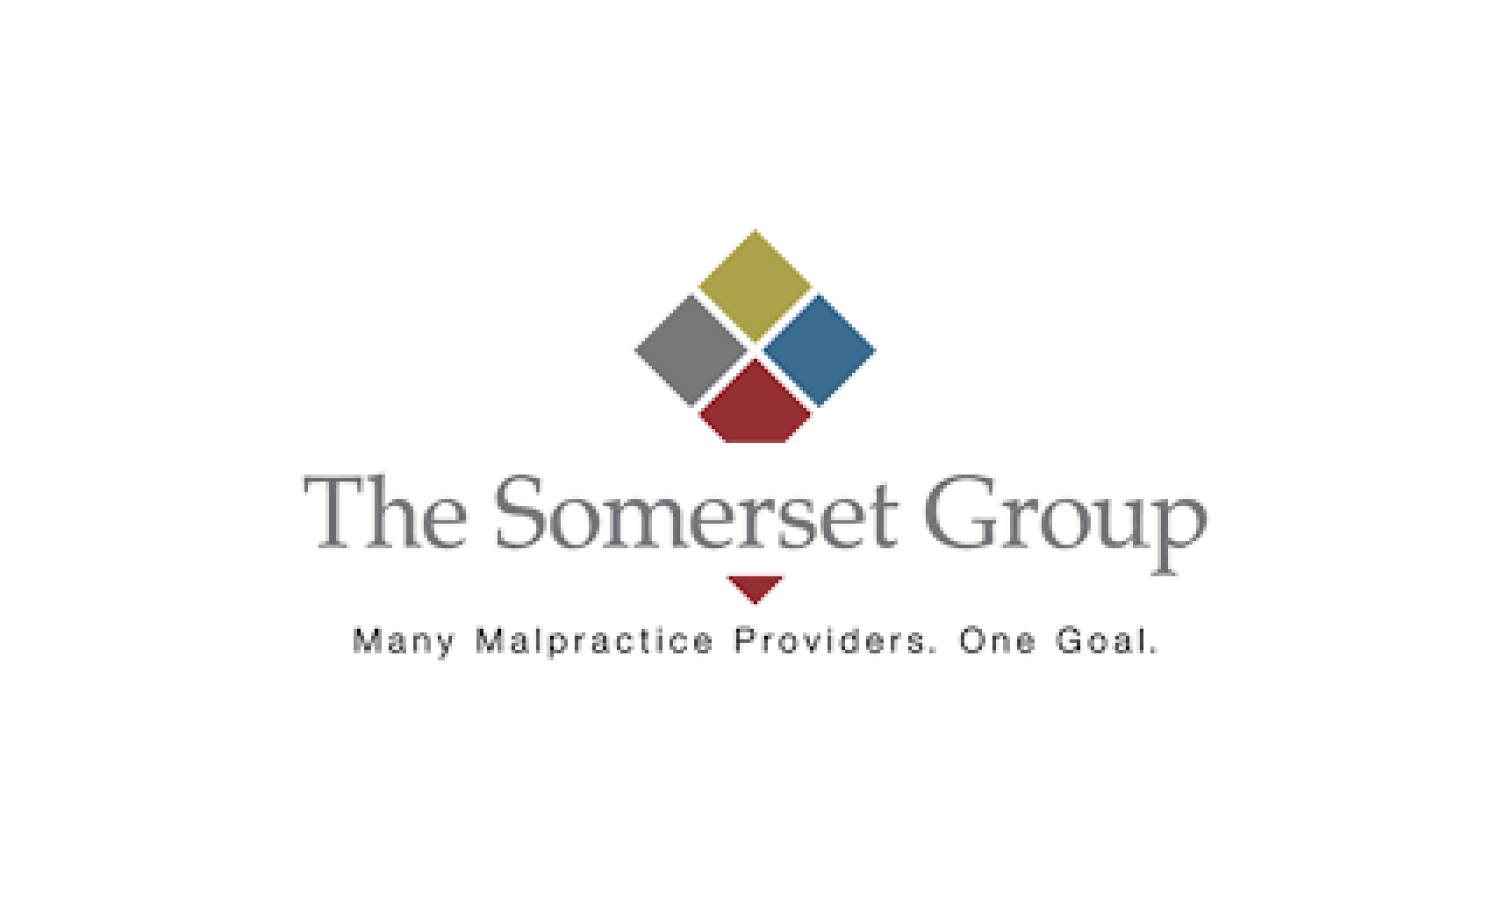 The Somerset Group logo